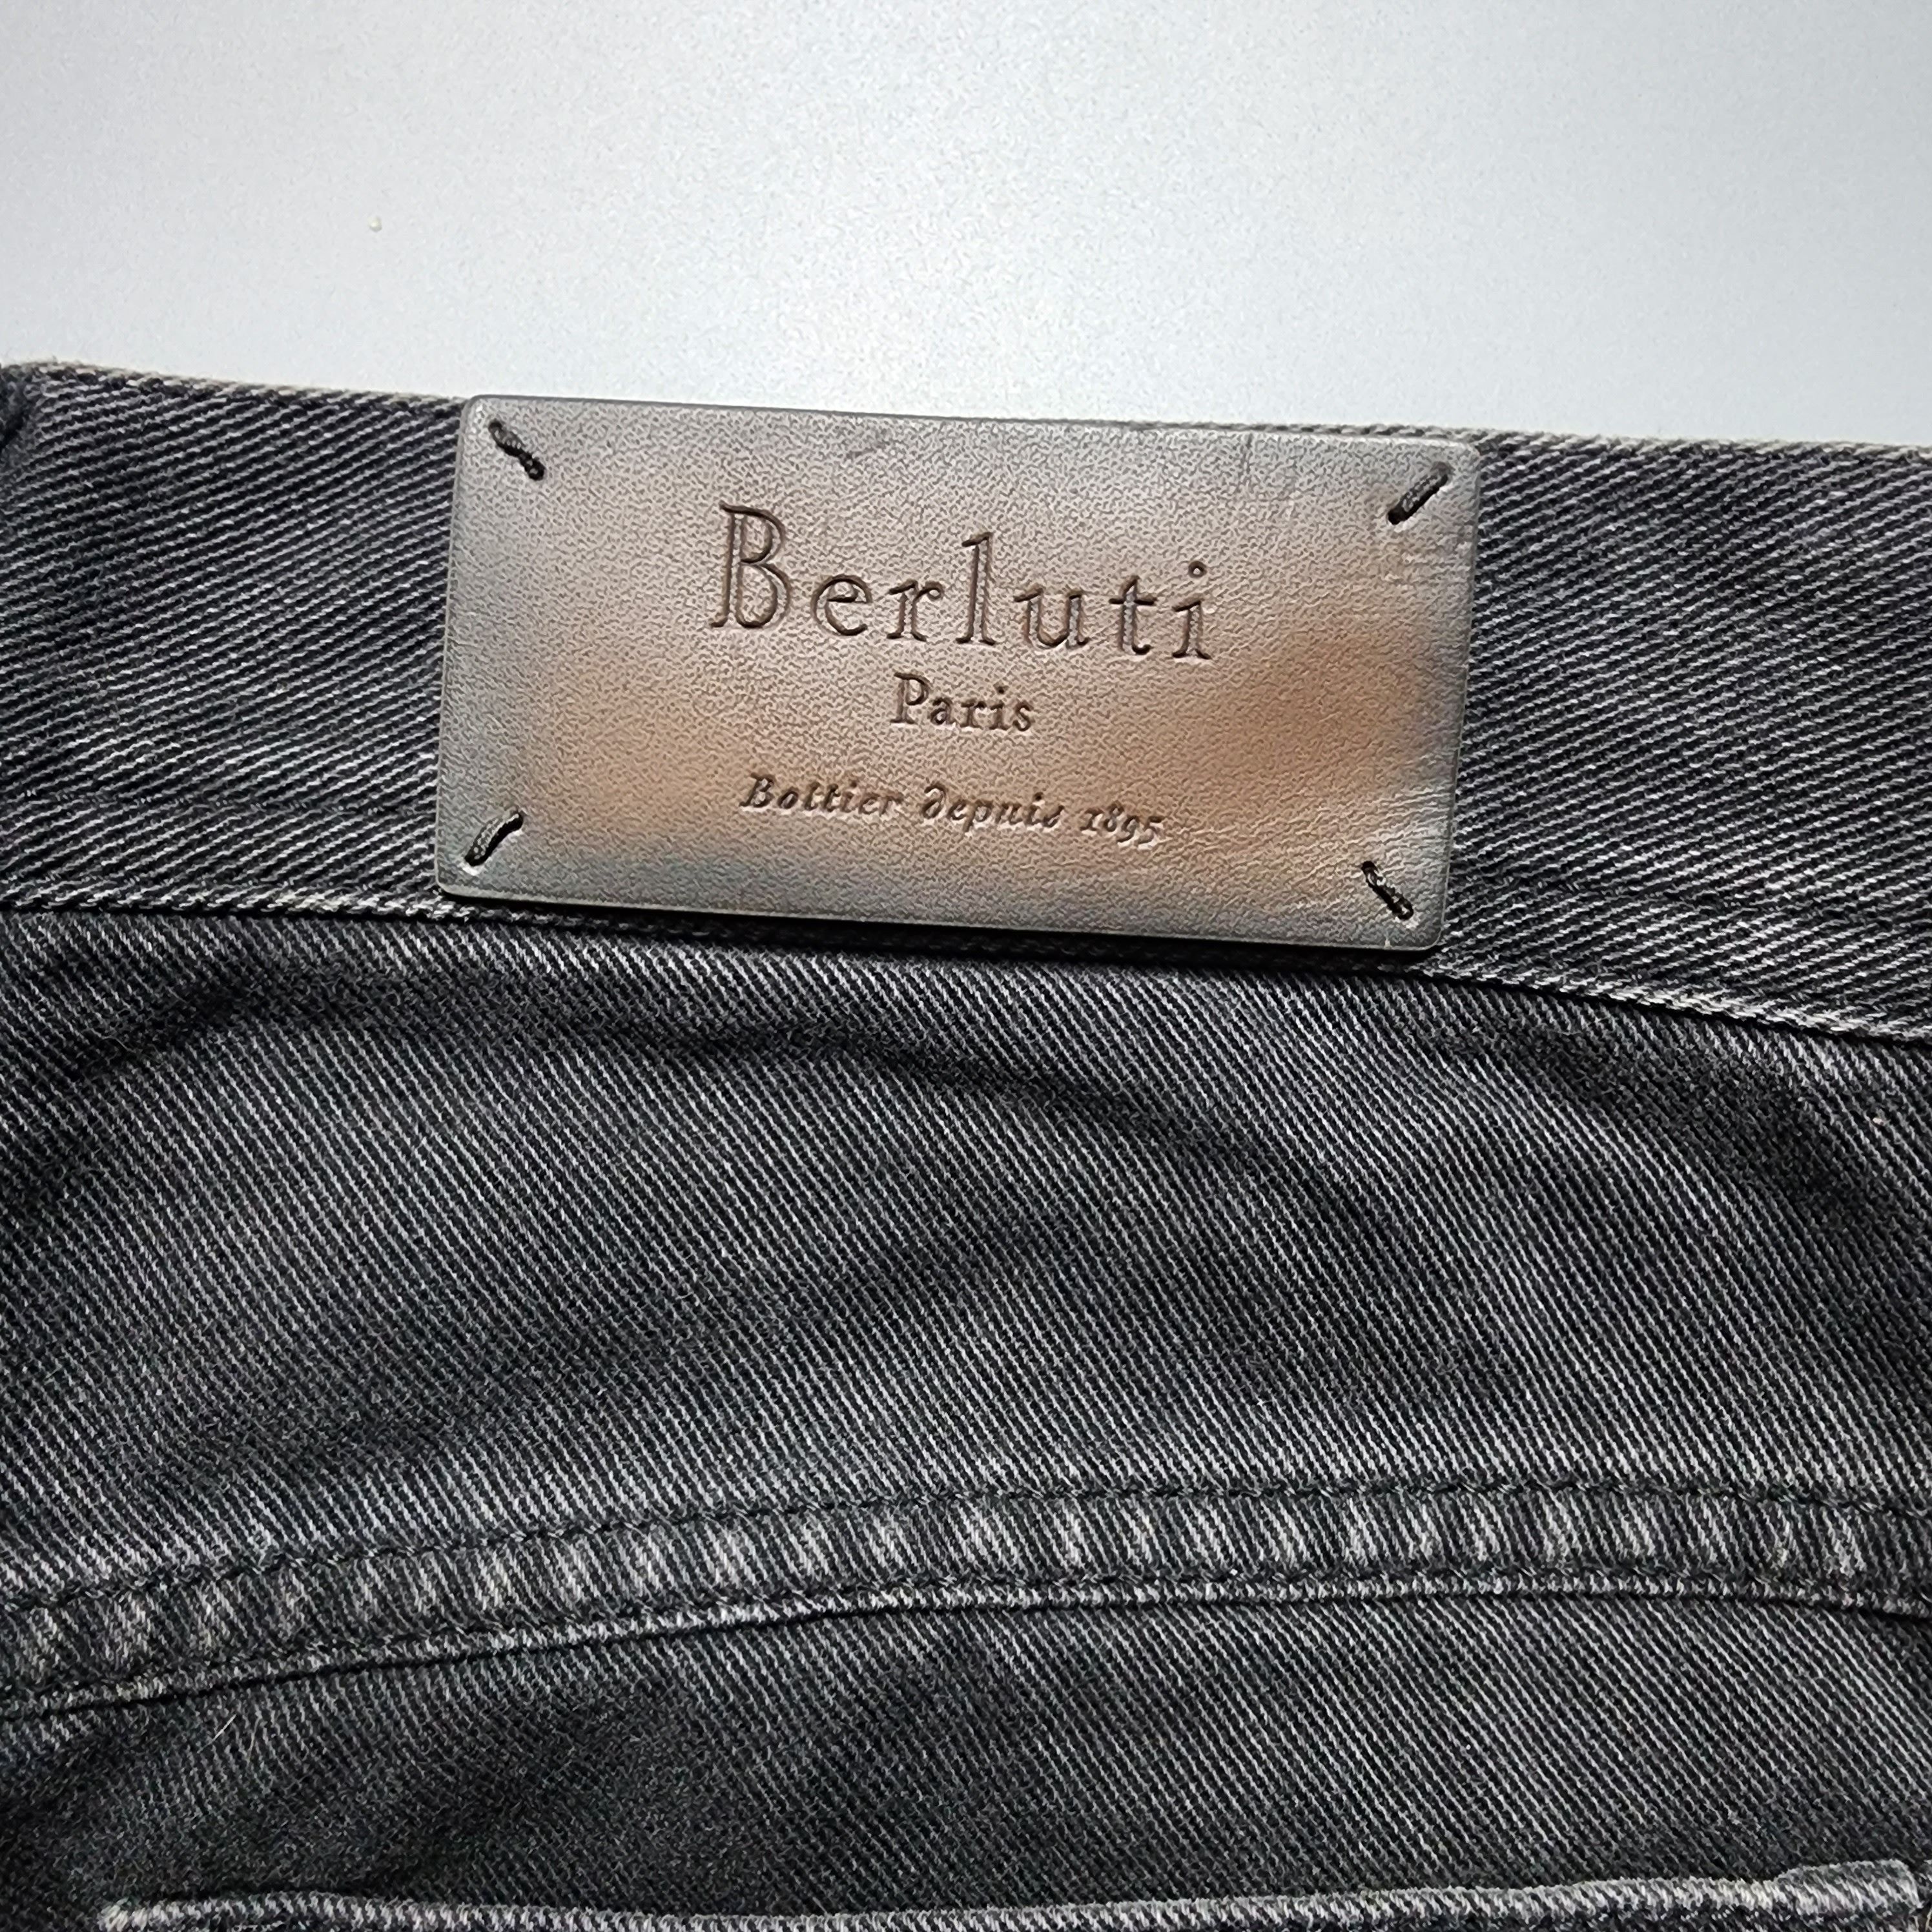 Berluti - Black Washed Jeans - 5